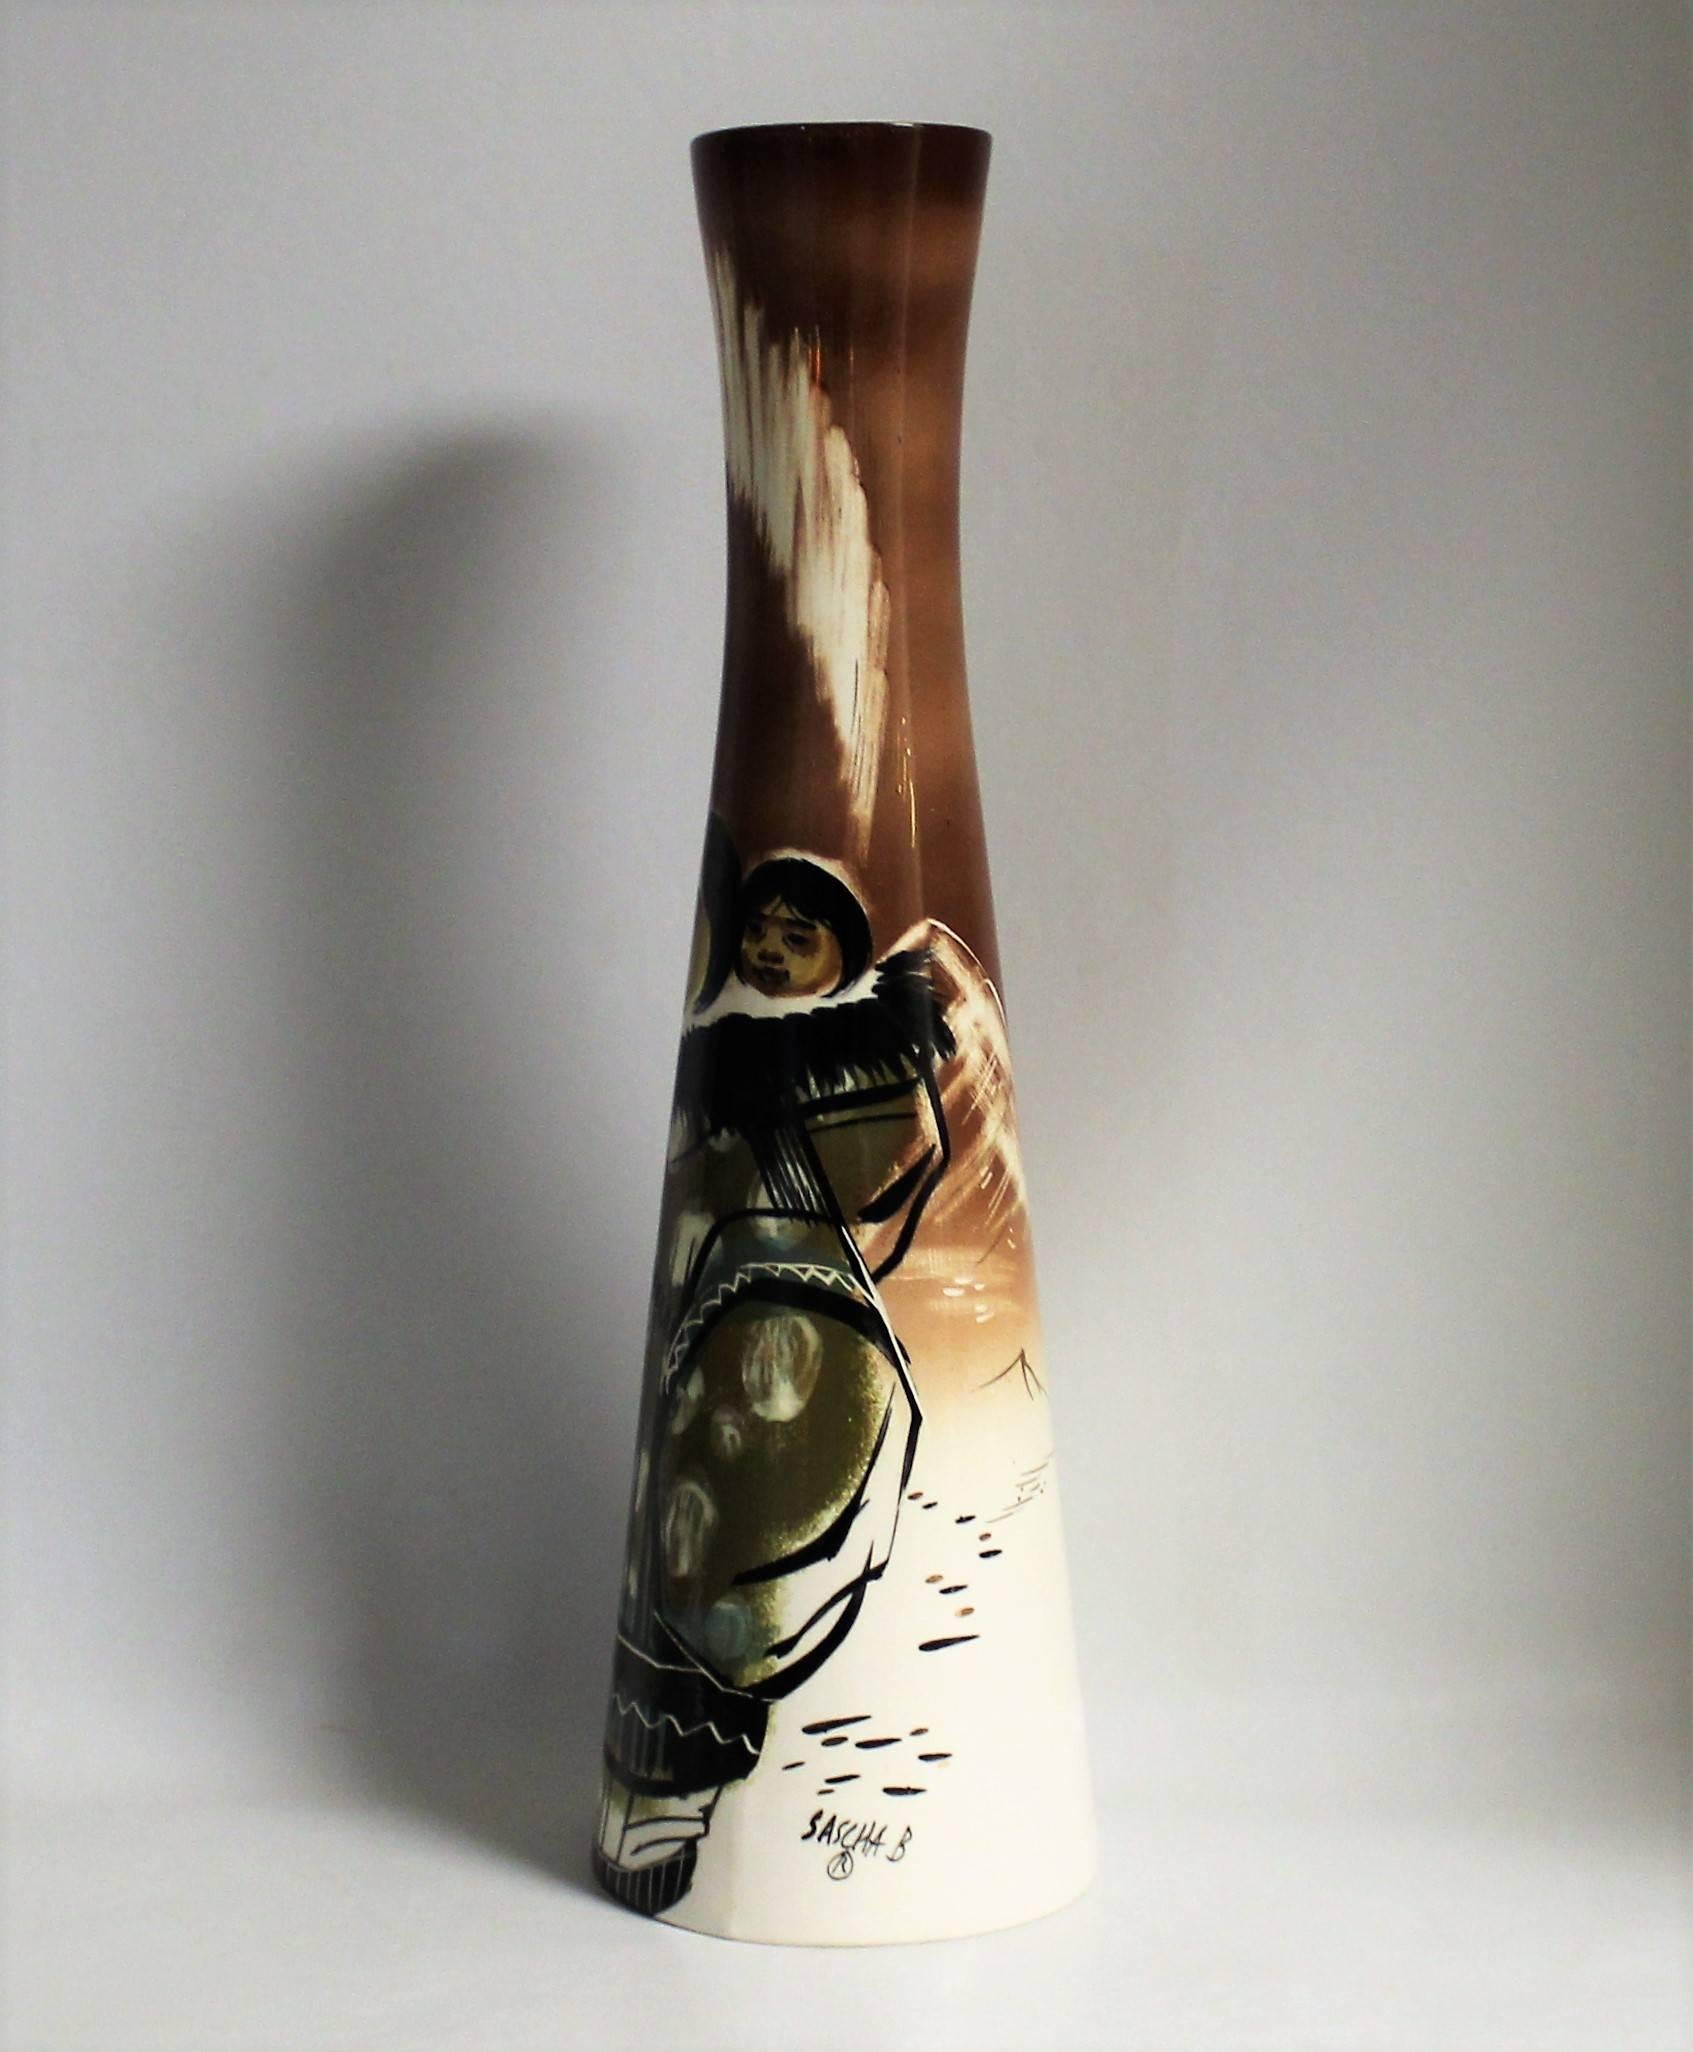 Vase Eskimo en céramique Sascha Brastoff, de style moderne du milieu du siècle.
 